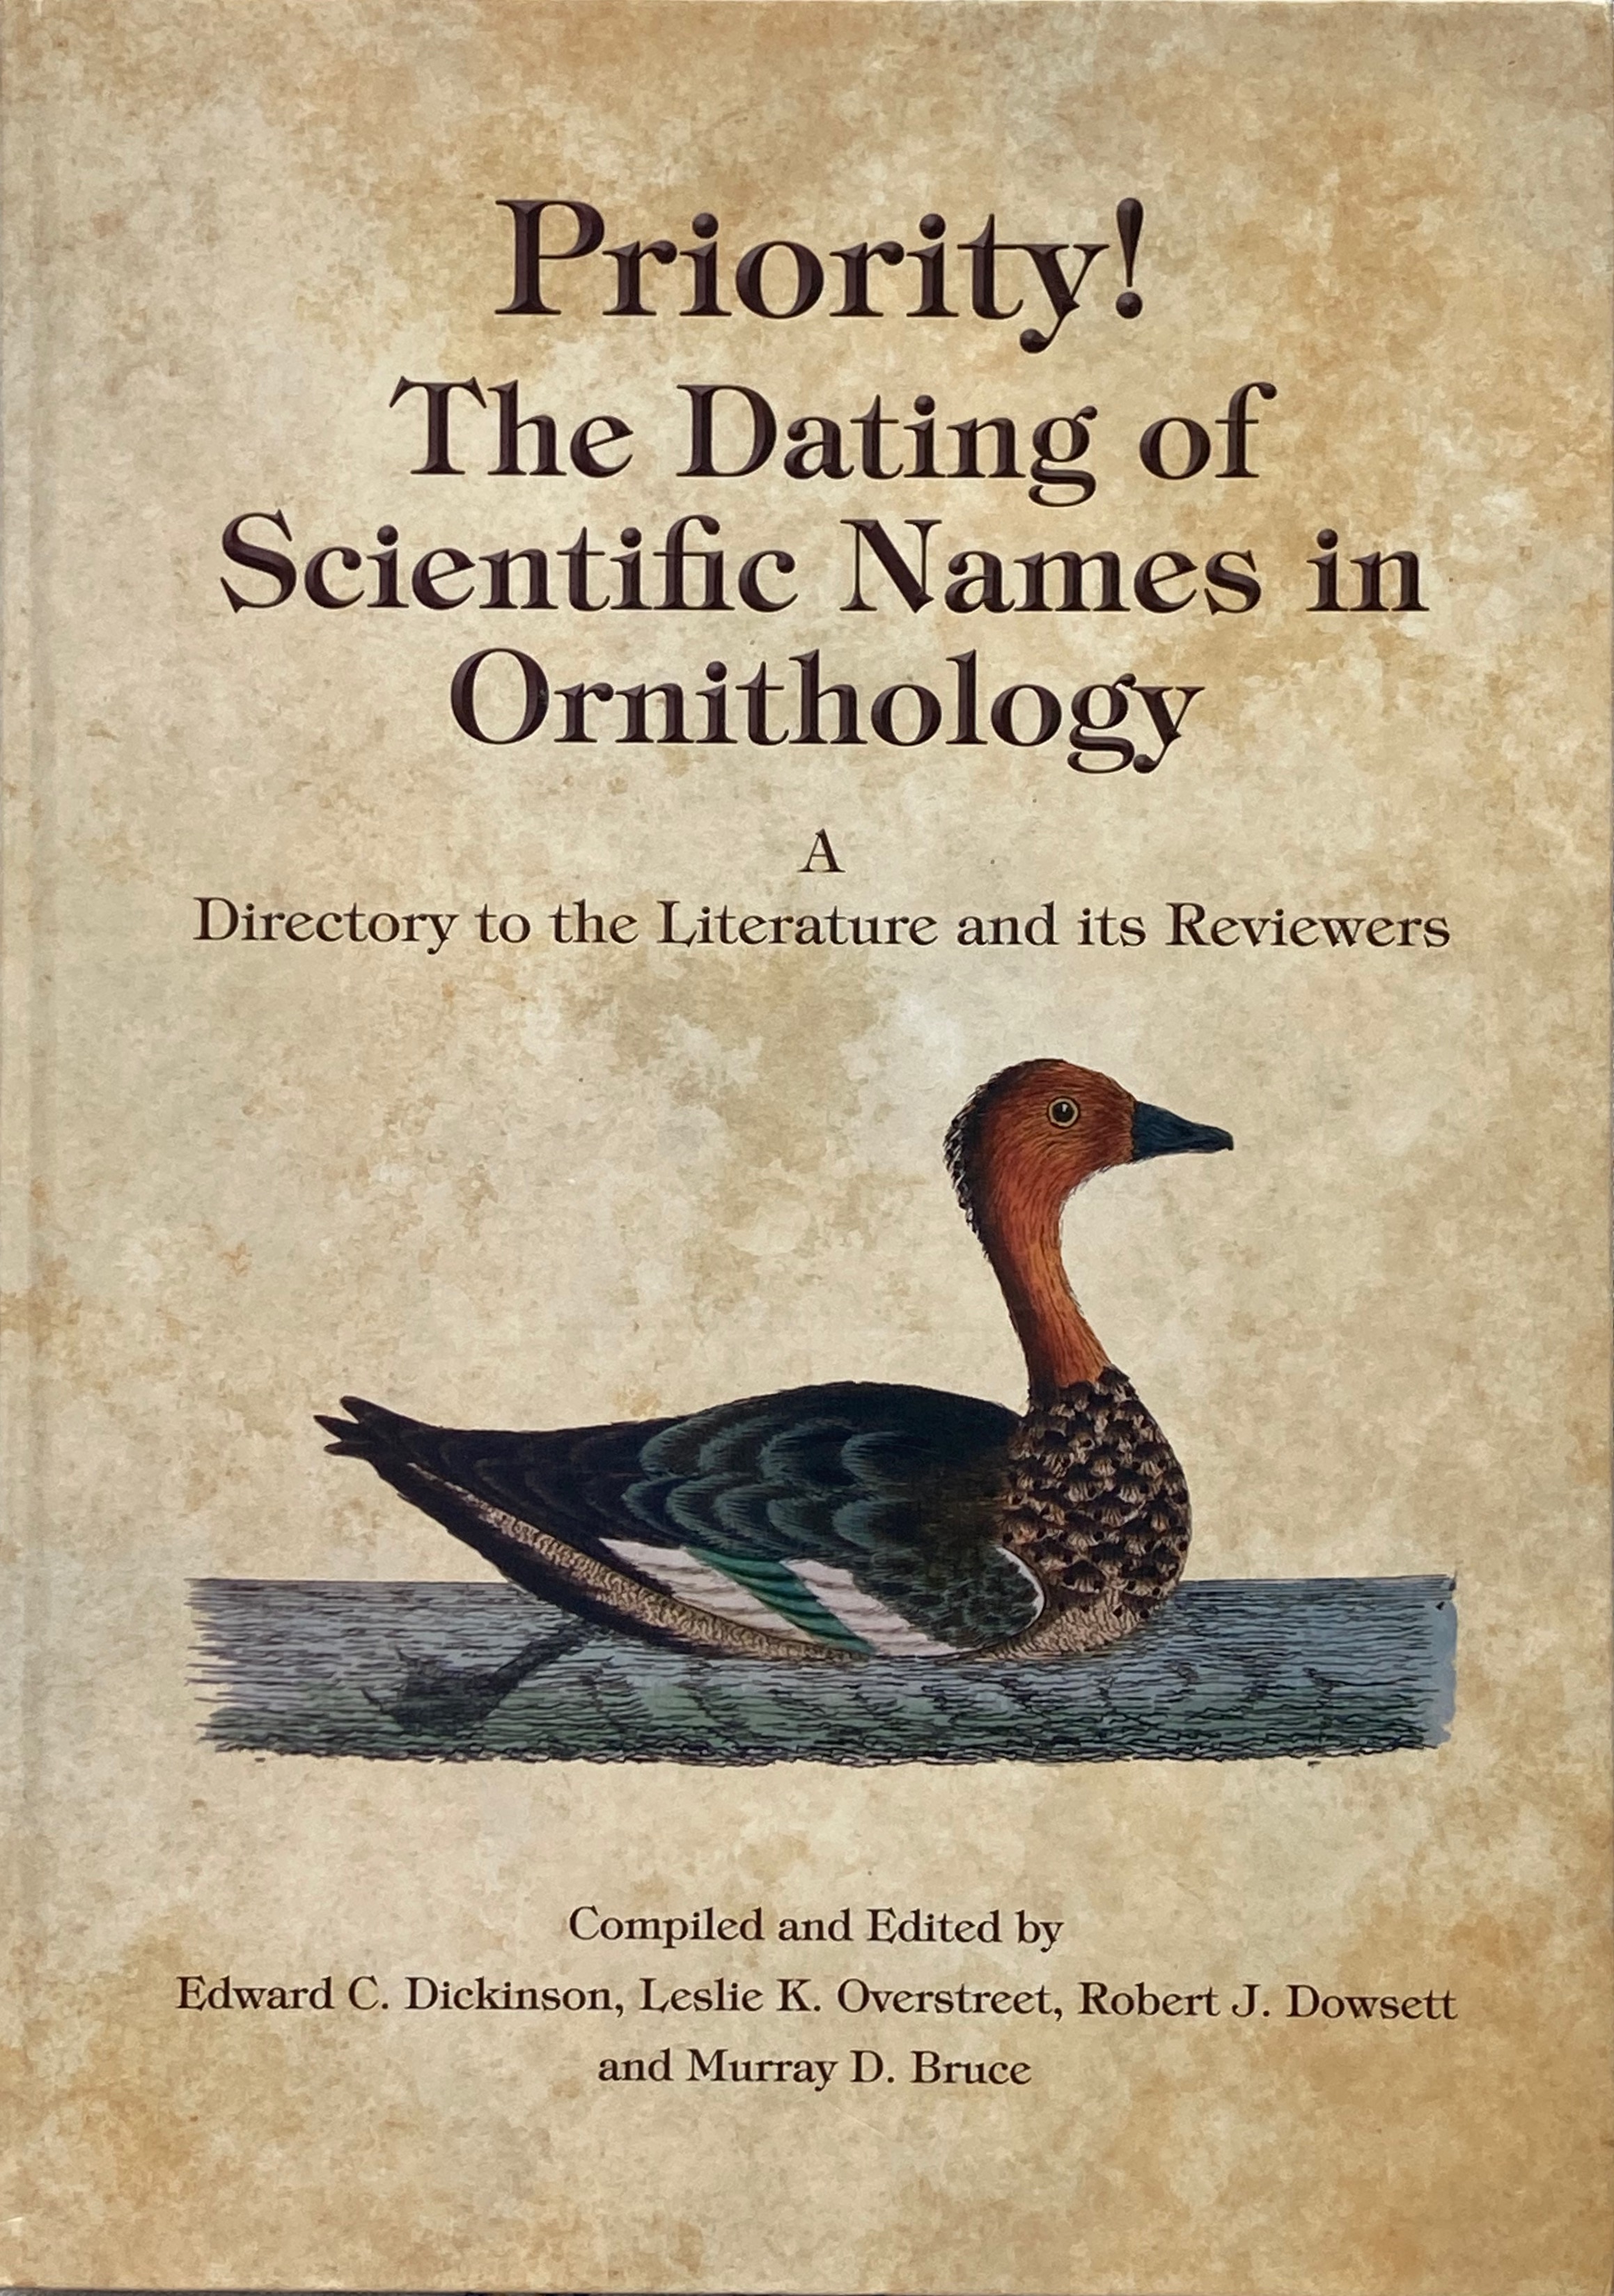 Priority! The dating of scientific names in ornithology - Dickinson, E C, Overstreet L K, Dowsett R J & Bruce D M